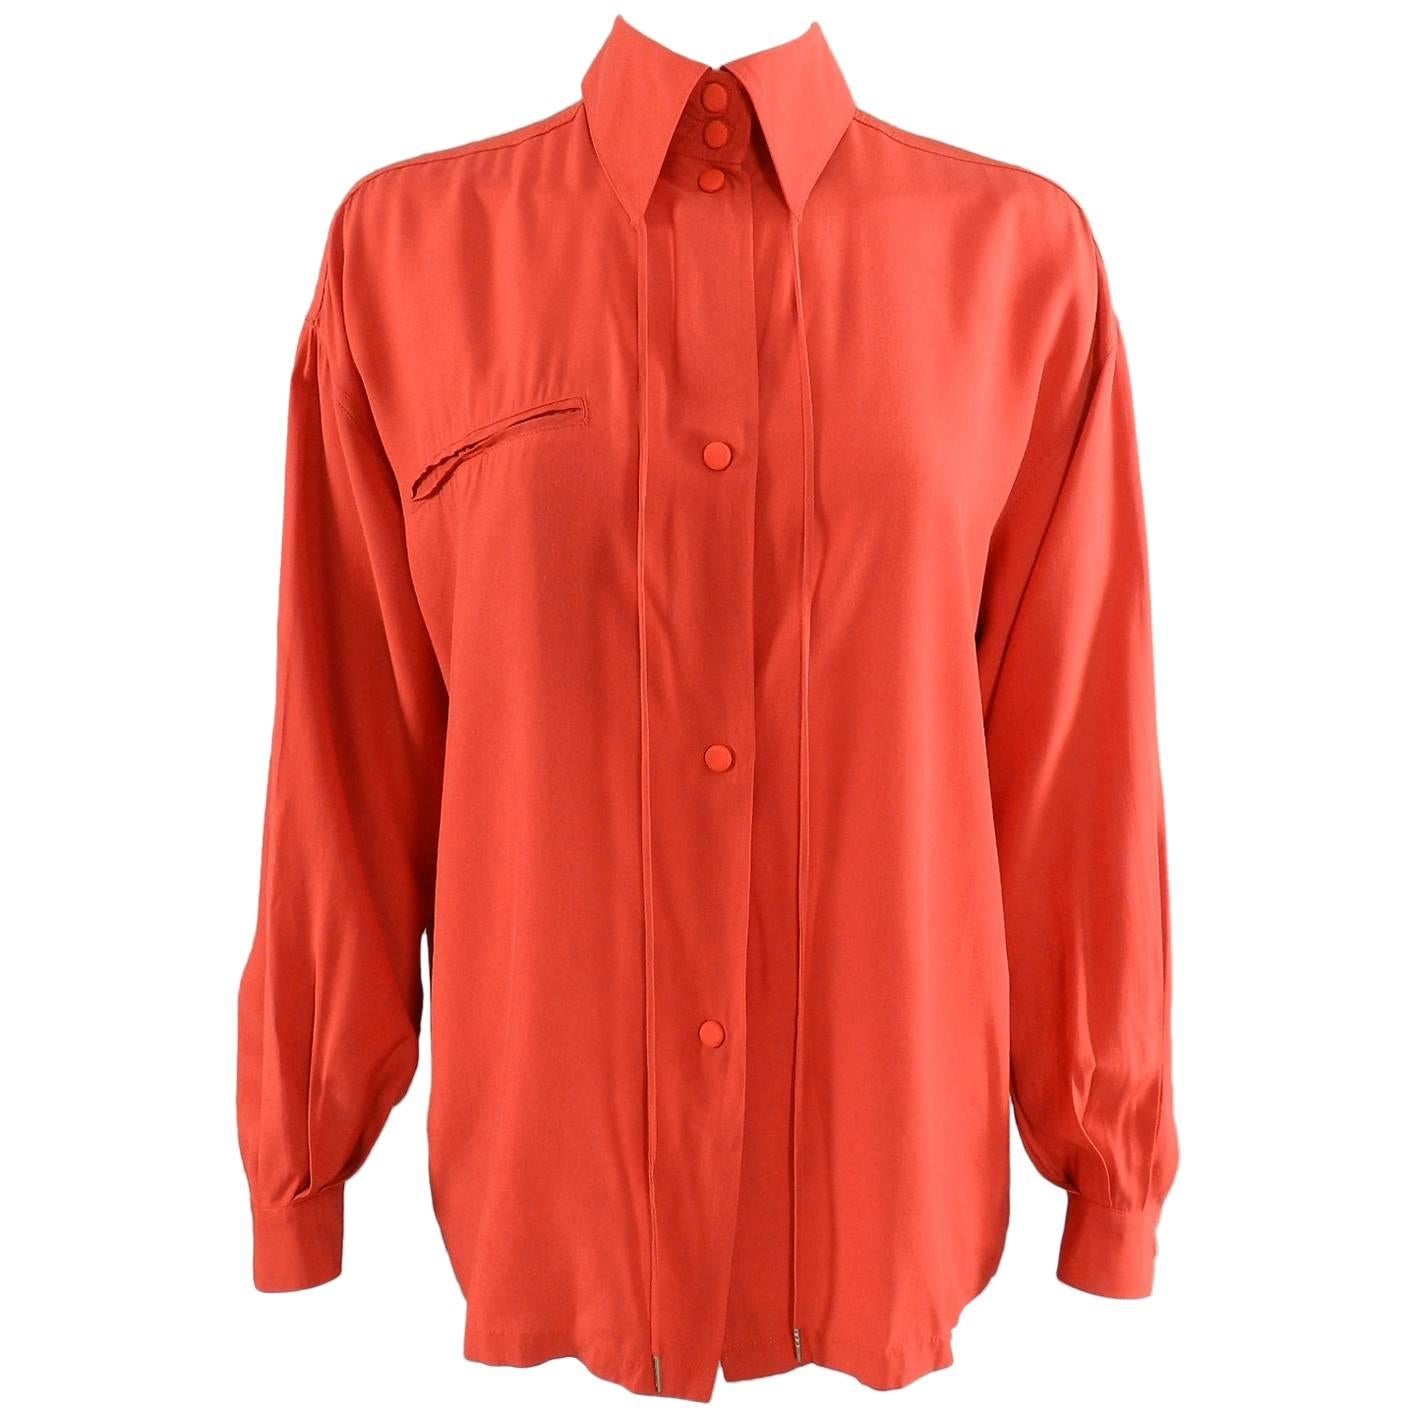 Claude Montana 1980's Orange Shirt with String Collar